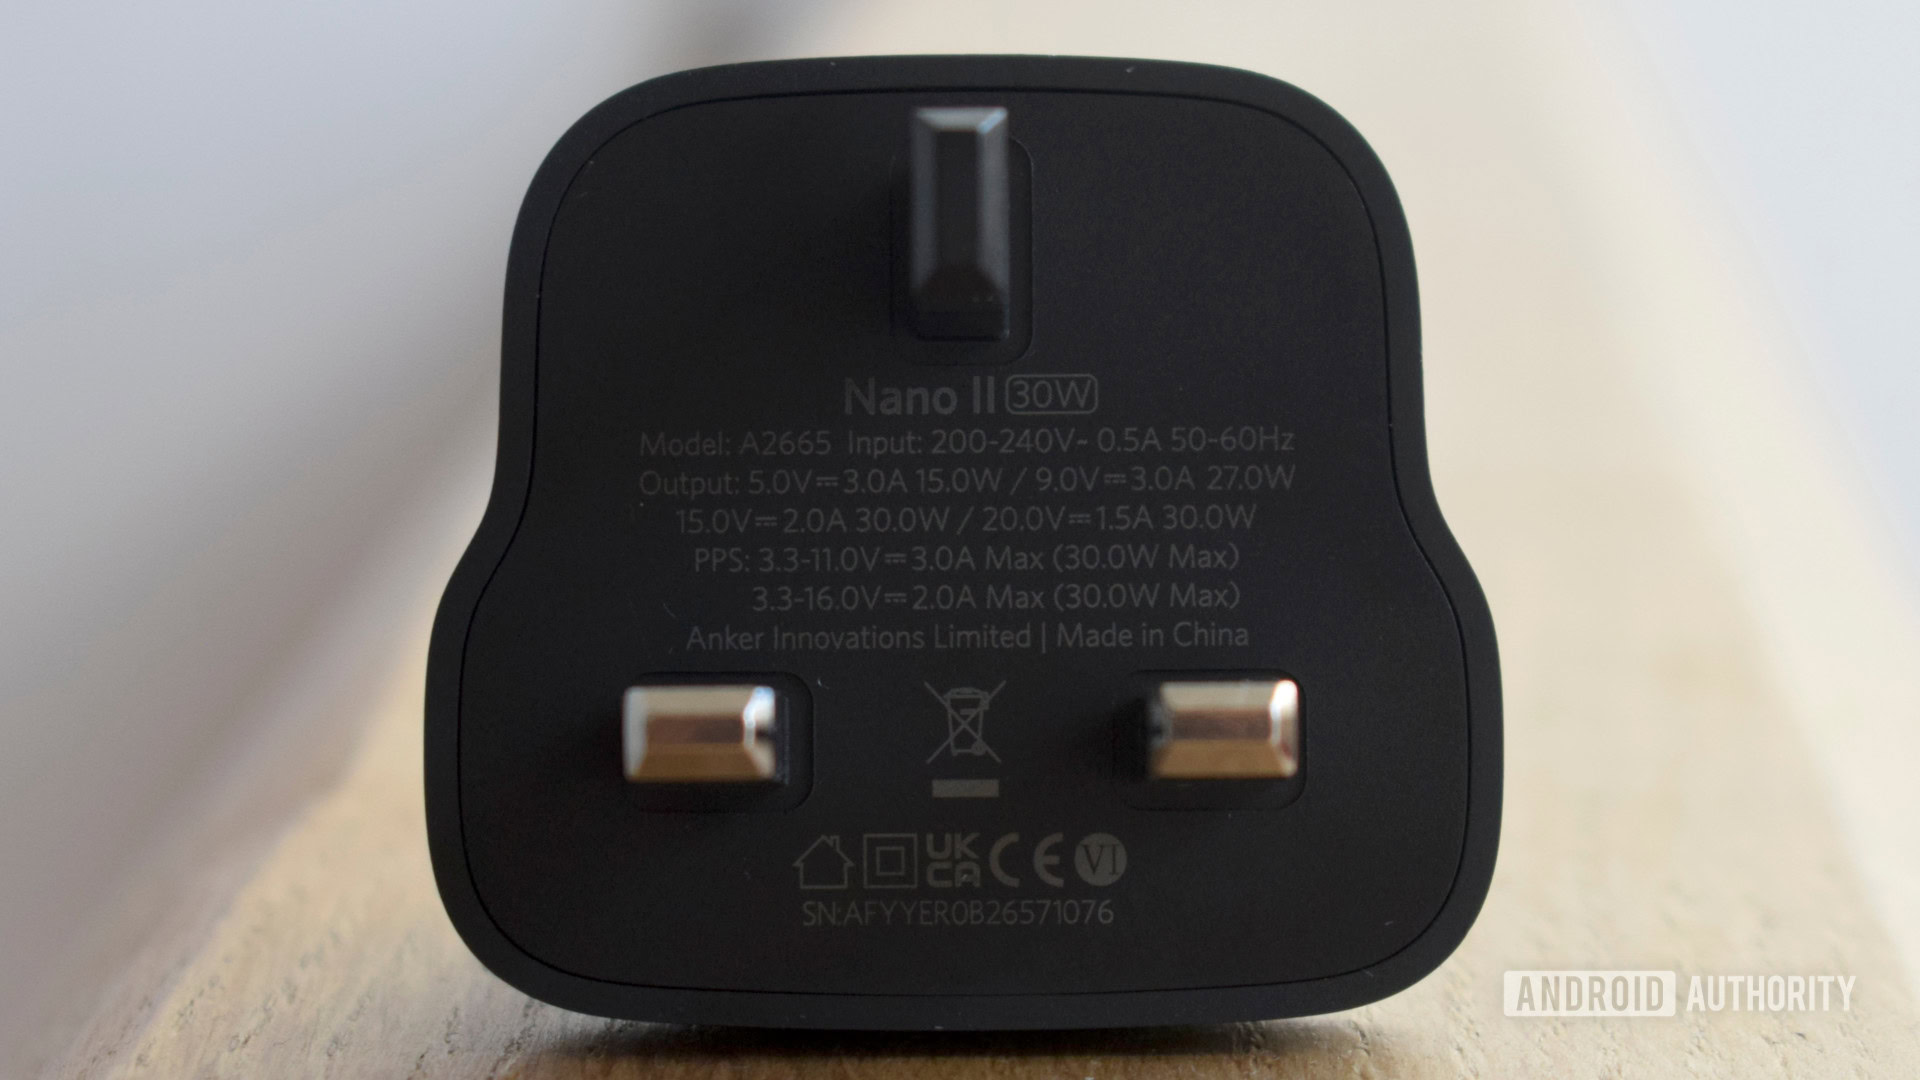 Anker Nano II charging specs